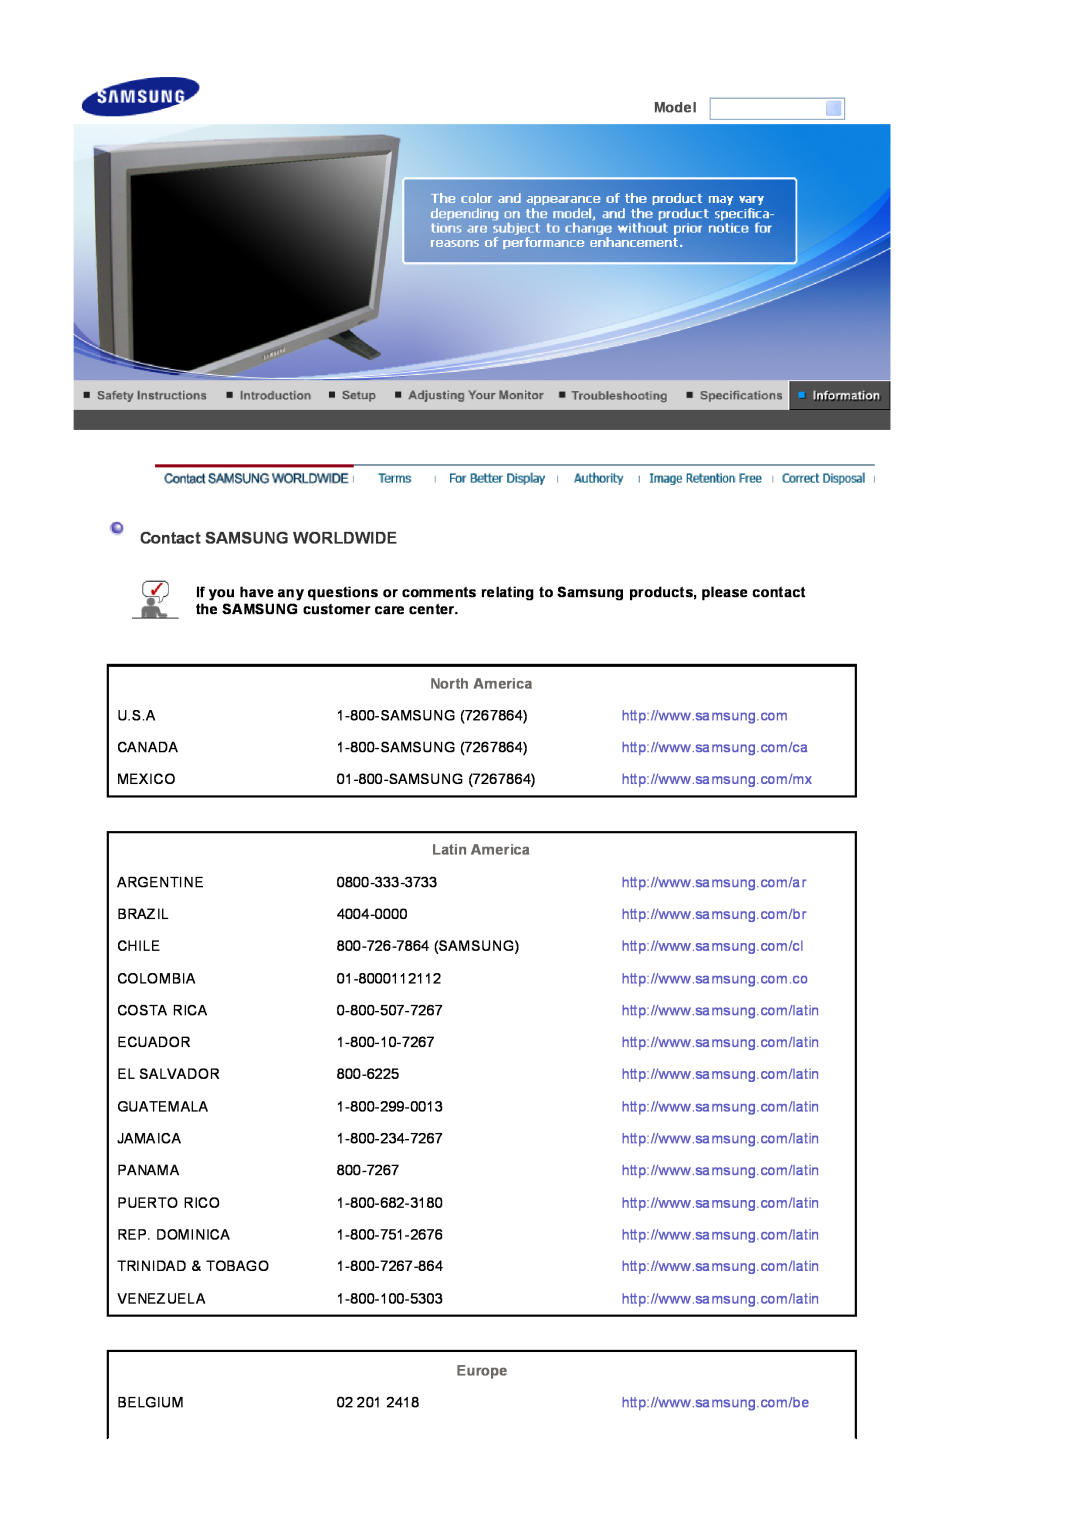 Samsung 320P manual Contact SAMSUNG WORLDWIDE, Model, North America, Latin America, Europe 